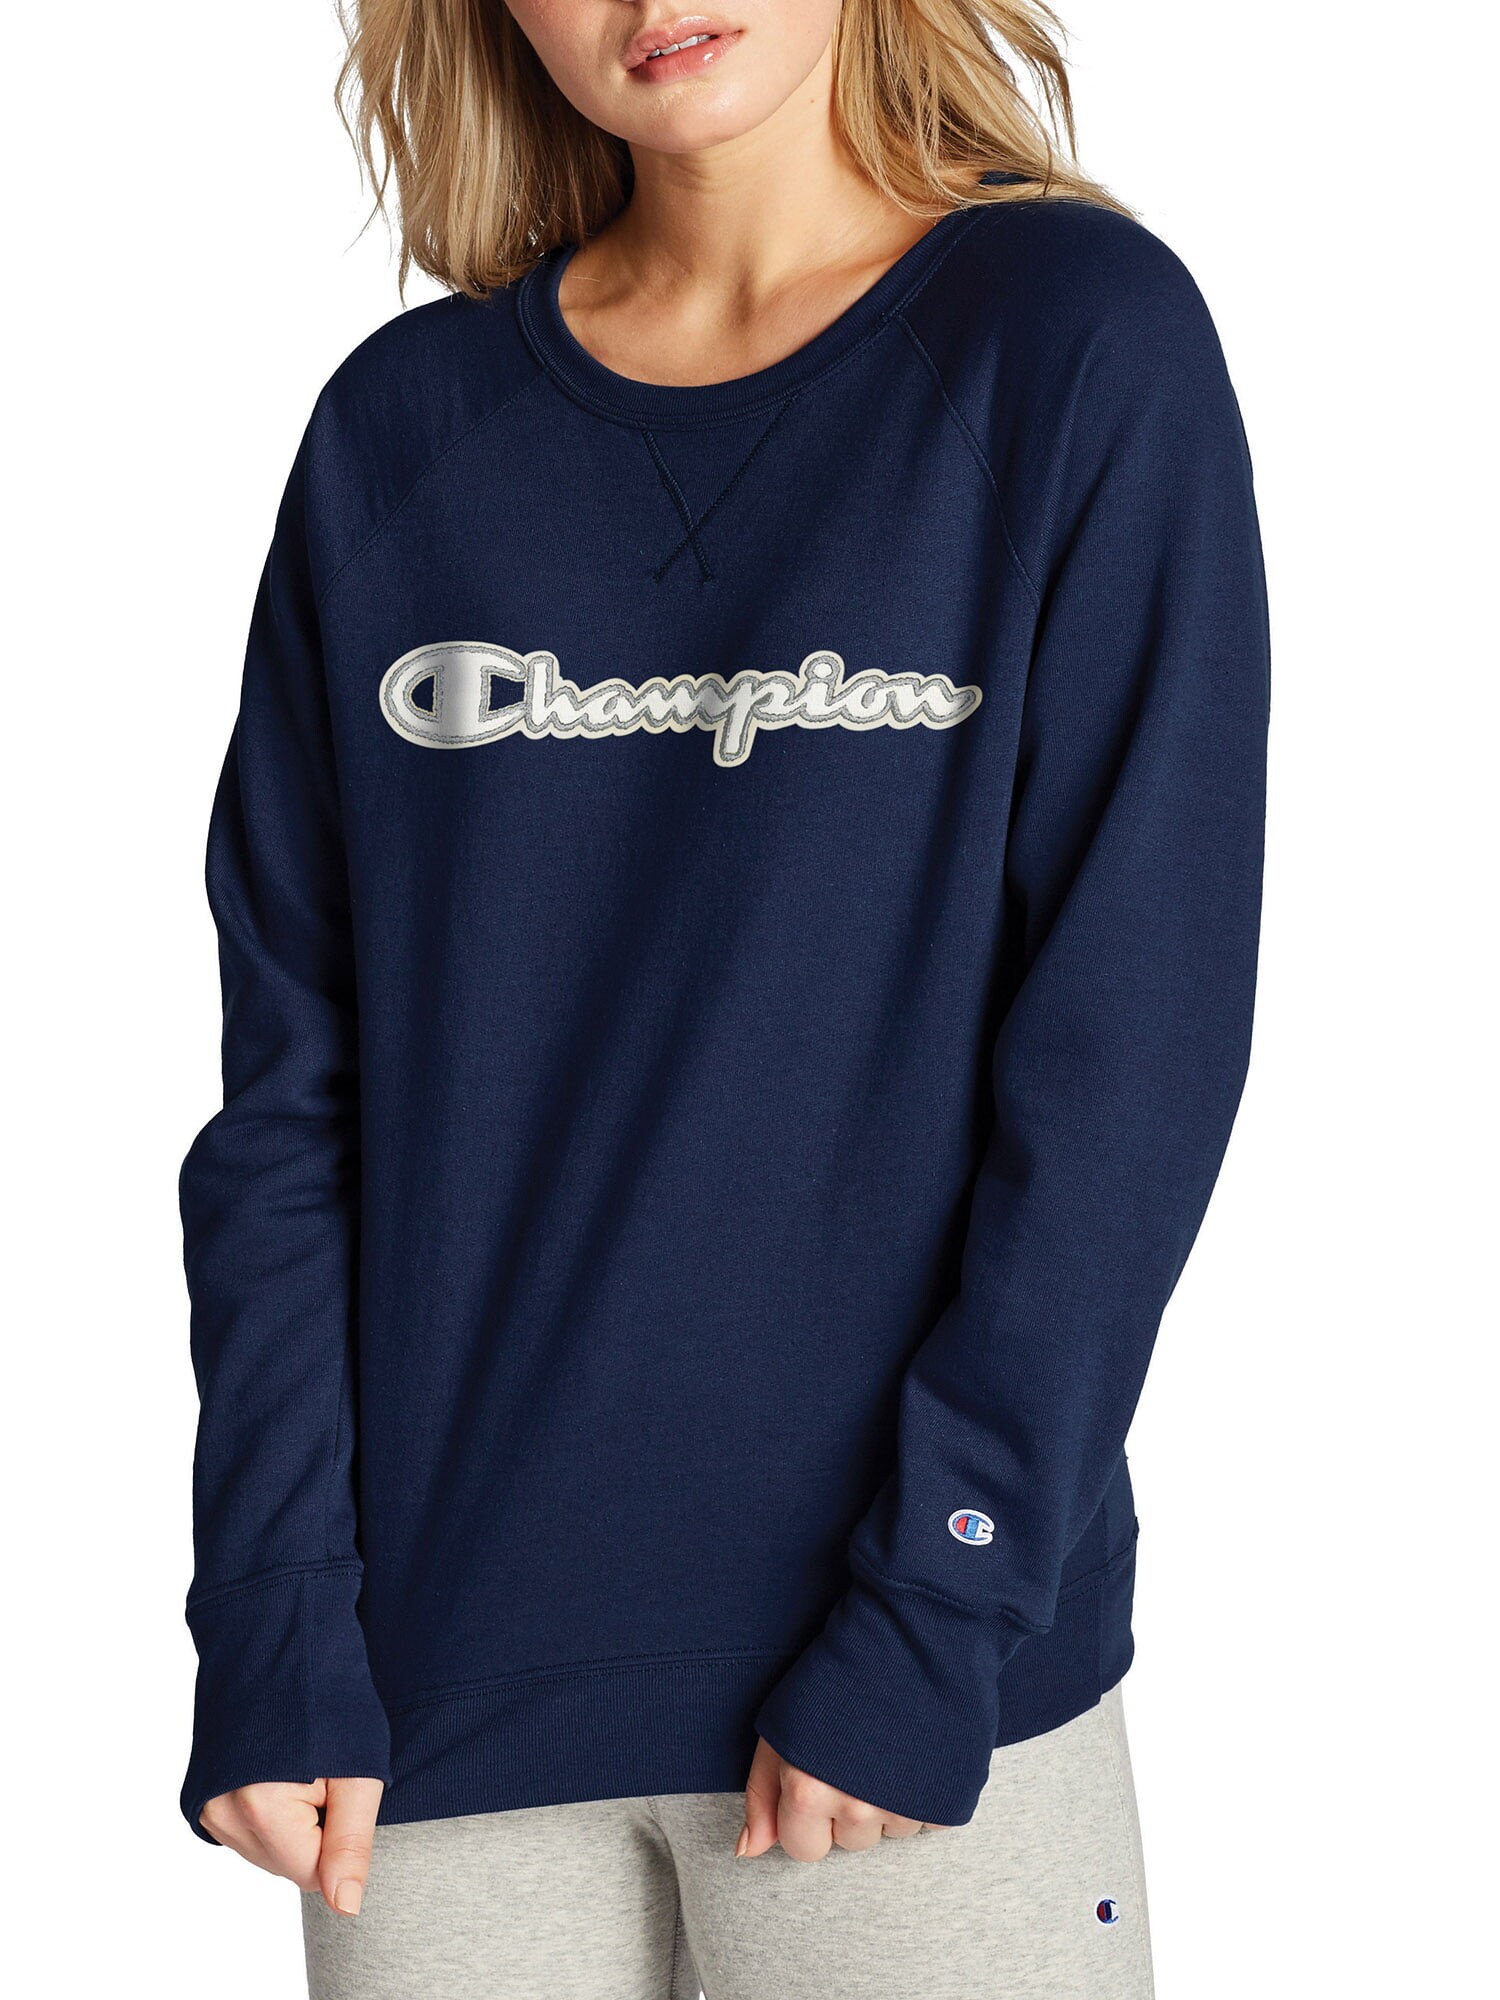 Champion CHAMPION Womens Navy Fleece Ribbed Long Sleeve Crew Neck Sweater M